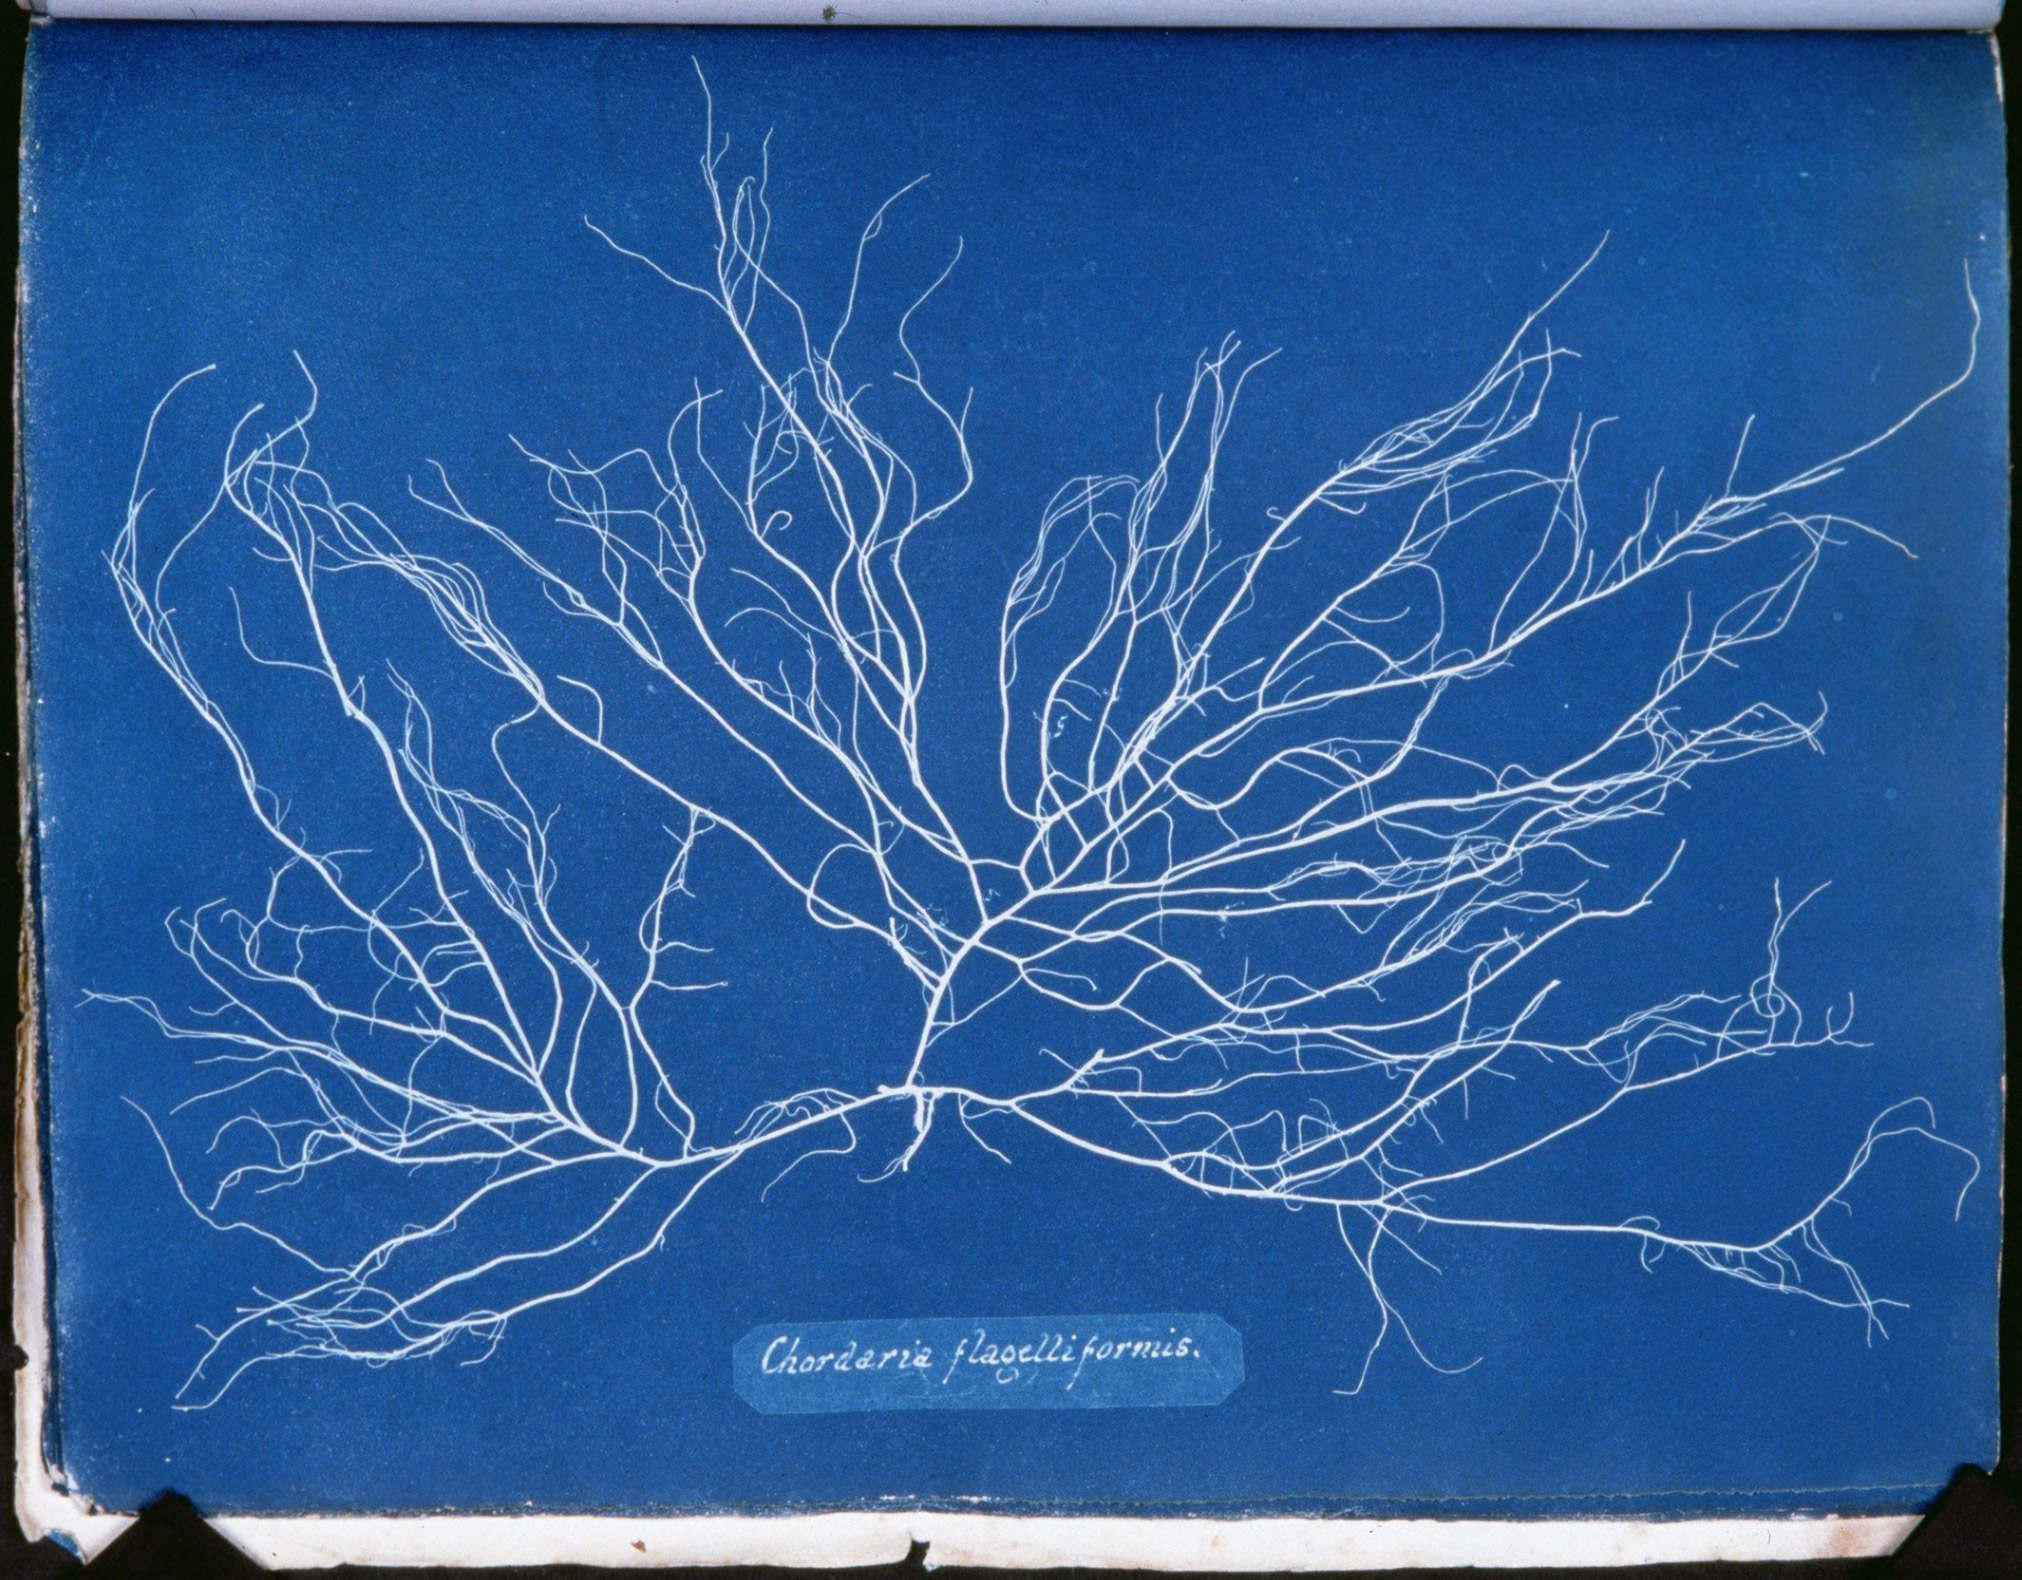 Chordaria flagelliformis,  Cyanotype impression dated 1843-1853.